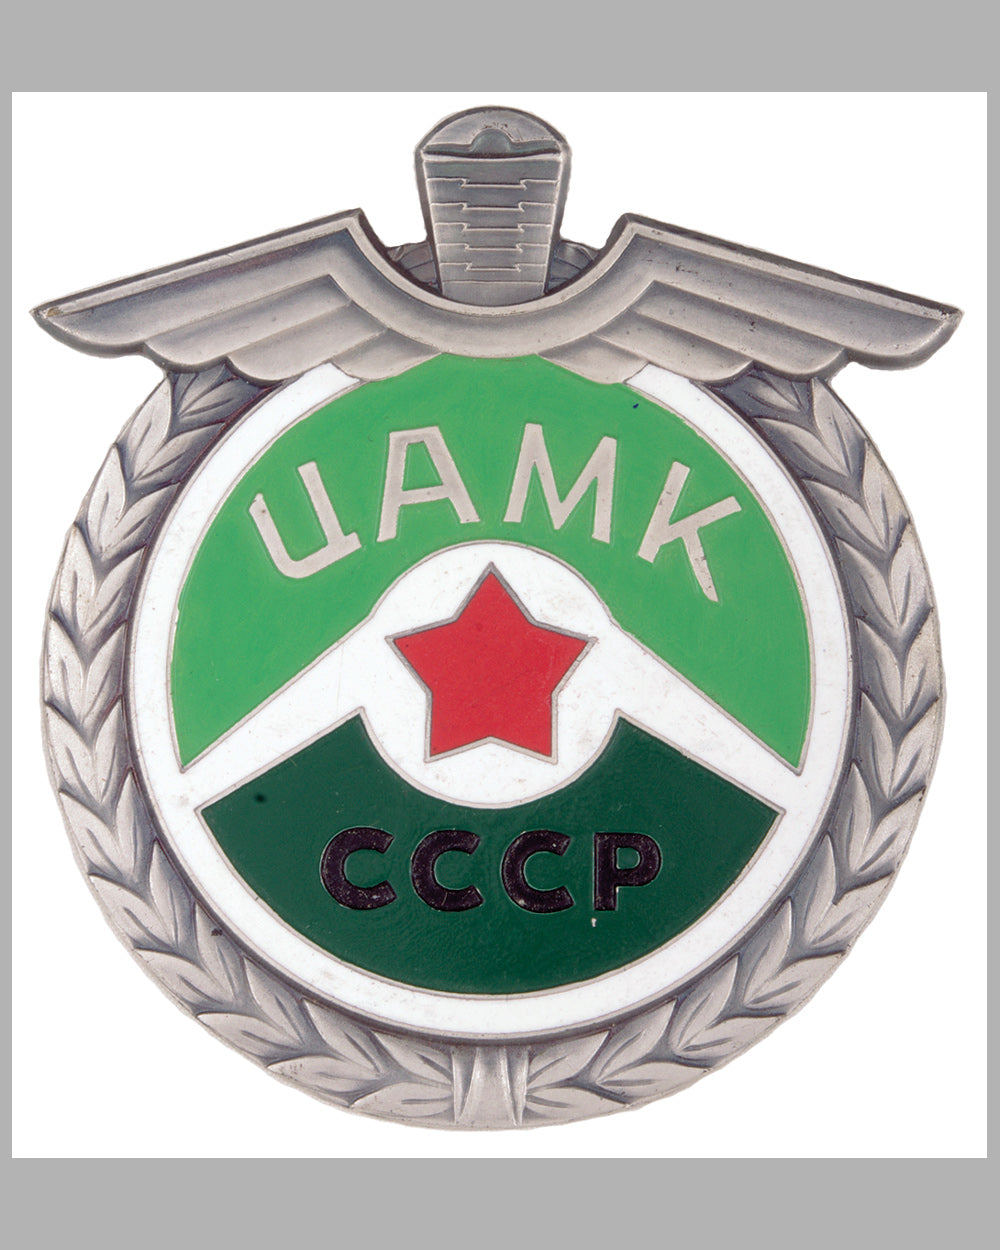 UAMK-CCCP member’s badge, USSR, 1960’s